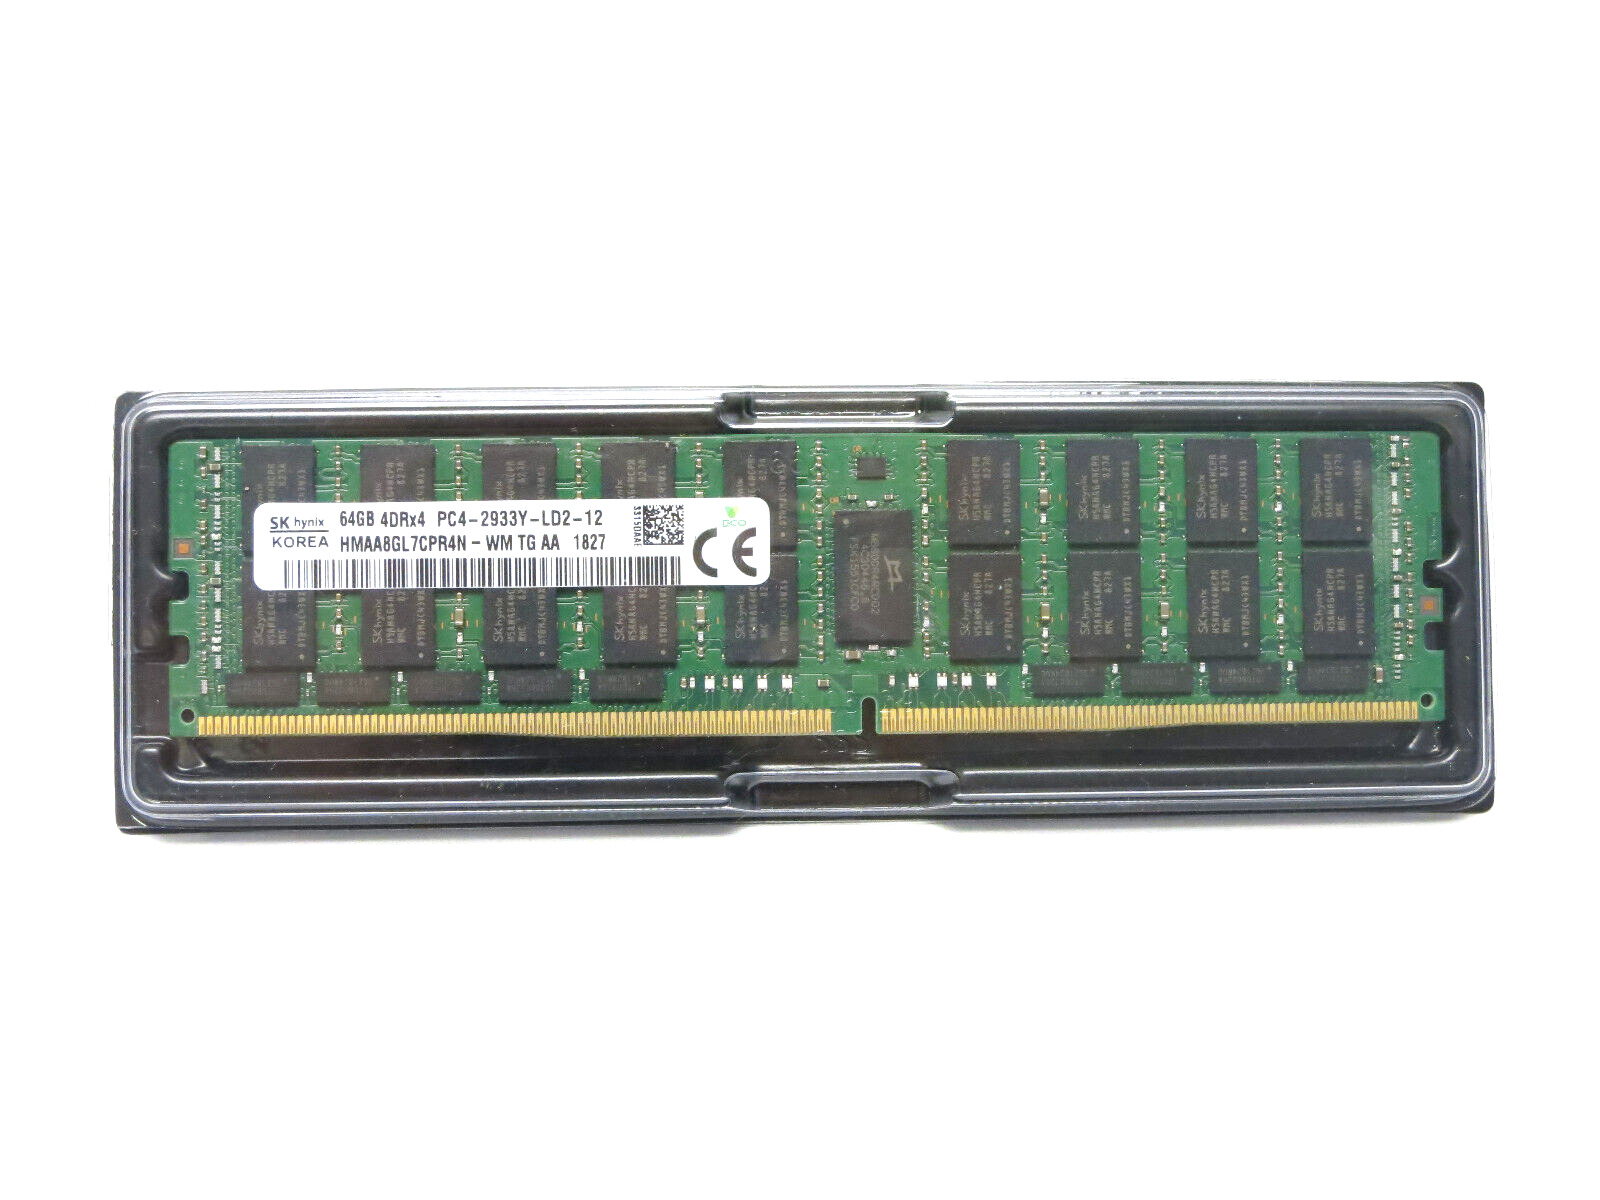 SK Hynix 64GB 4DRx4 PC4-2933Y-LD2-12 DDR4 2933 MHz  288-Pin SDRAM RAM